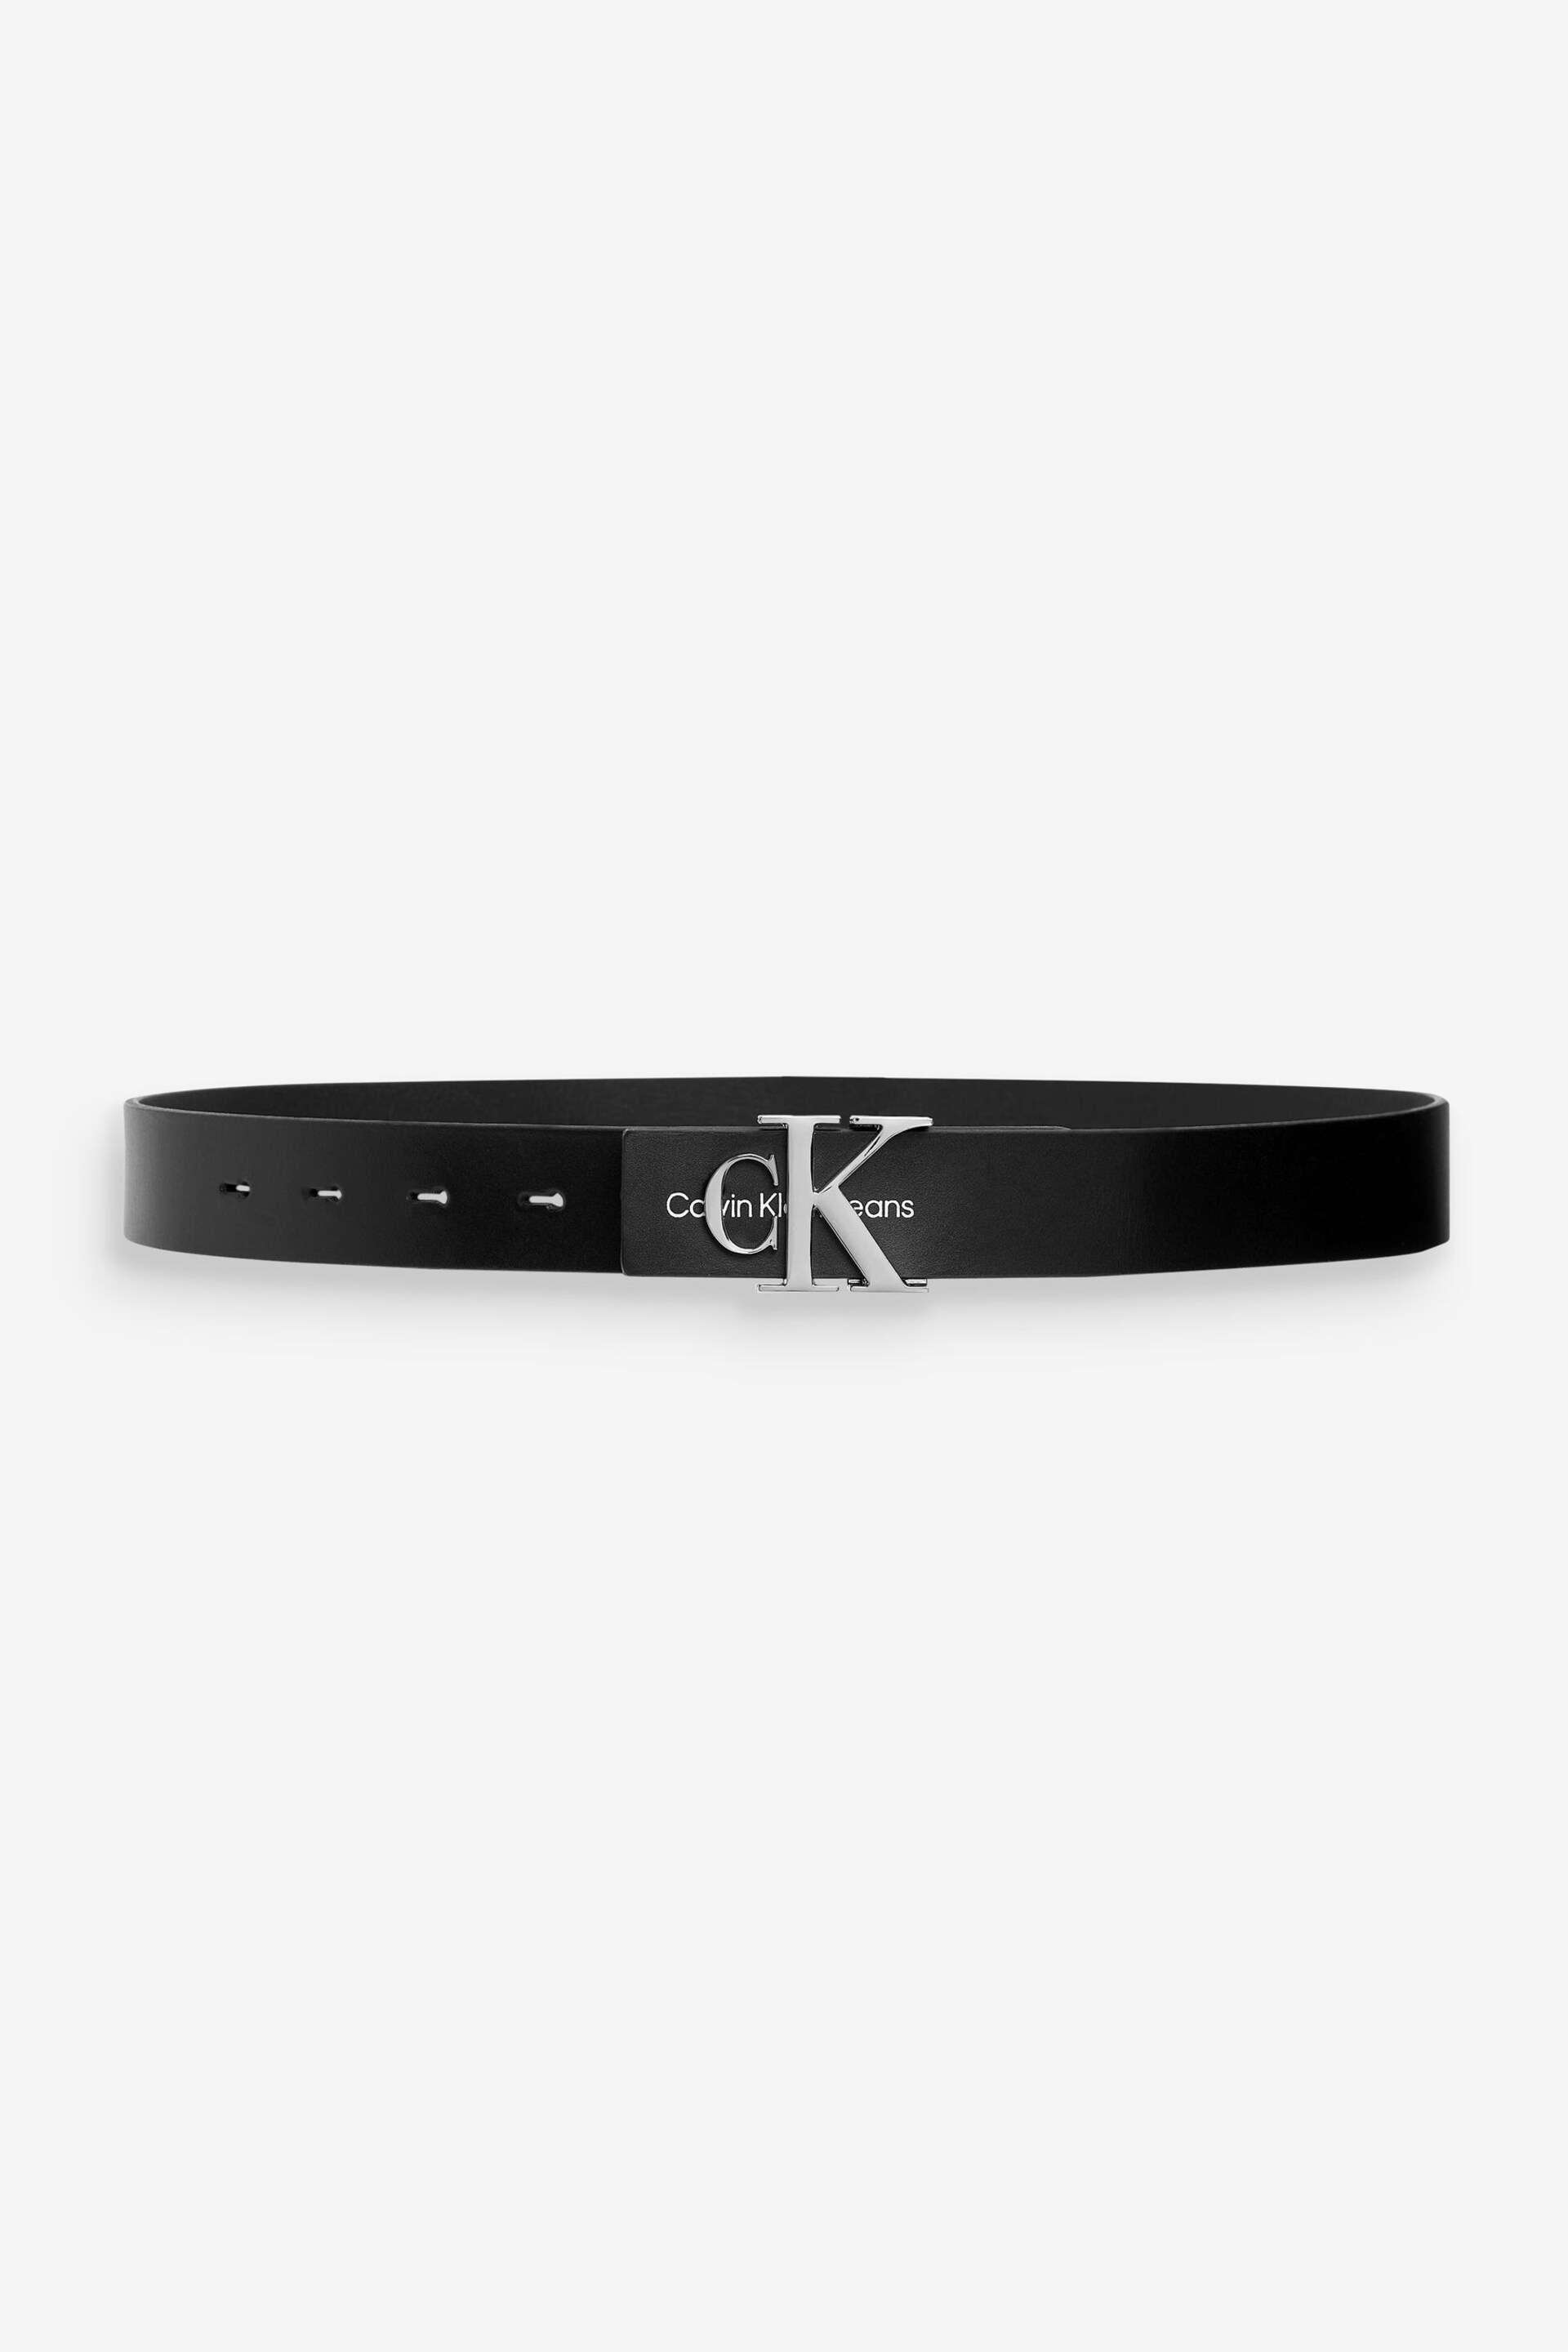 Calvin Klein Black Hardware Belt - Image 2 of 3